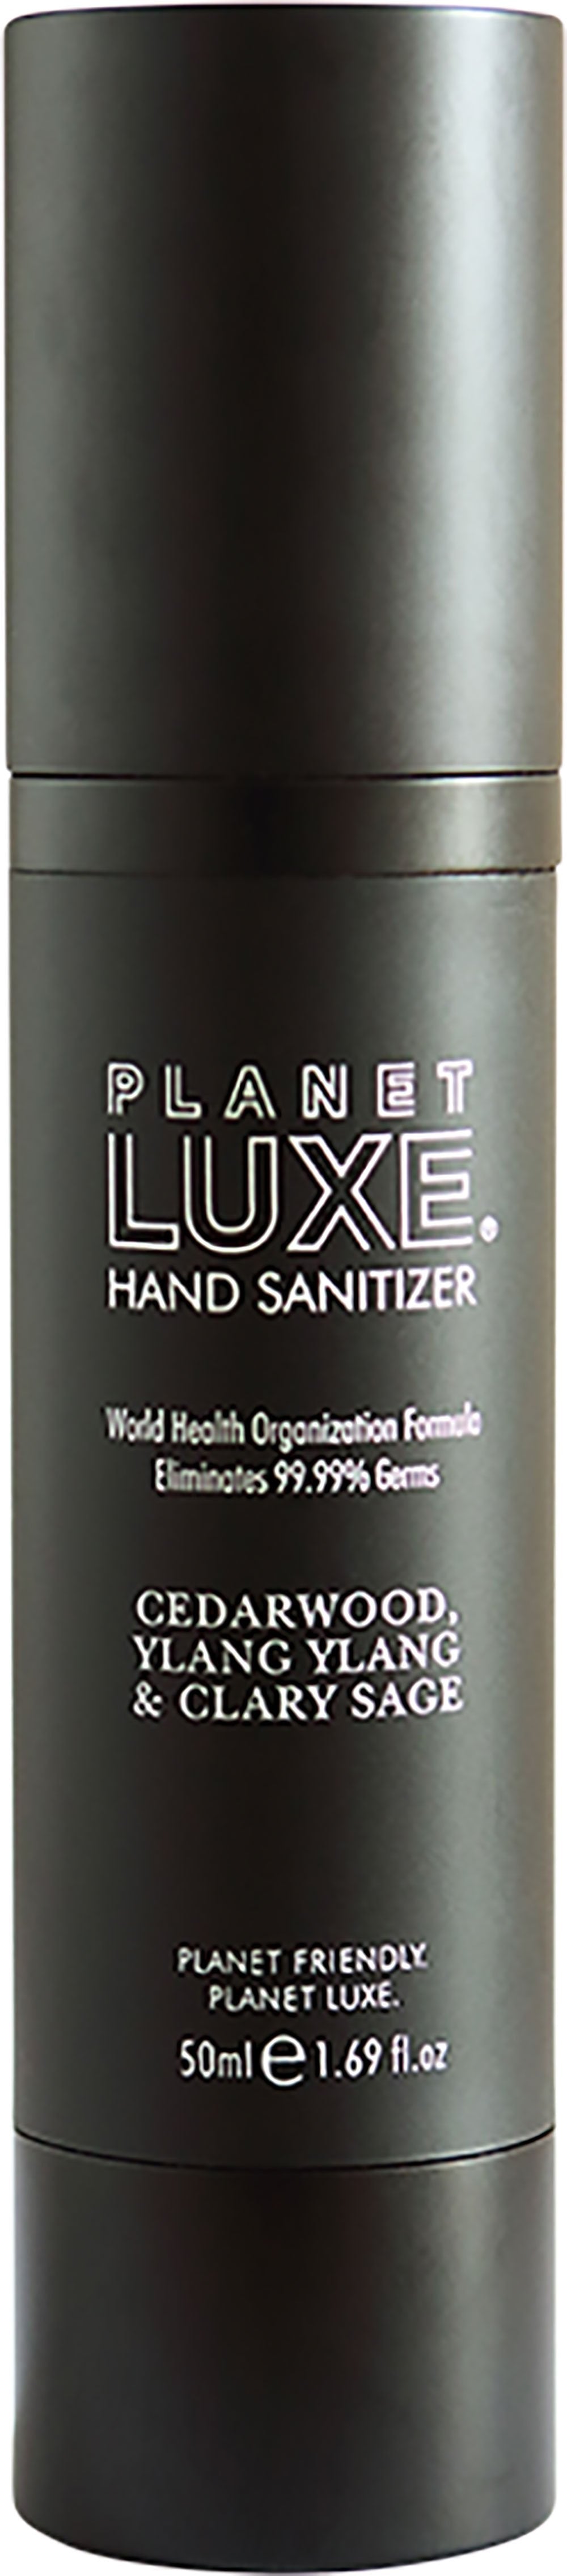 PLANET LUXE Hand Sanitizer Cedarwood, Ylang Ylang & Clary Sage